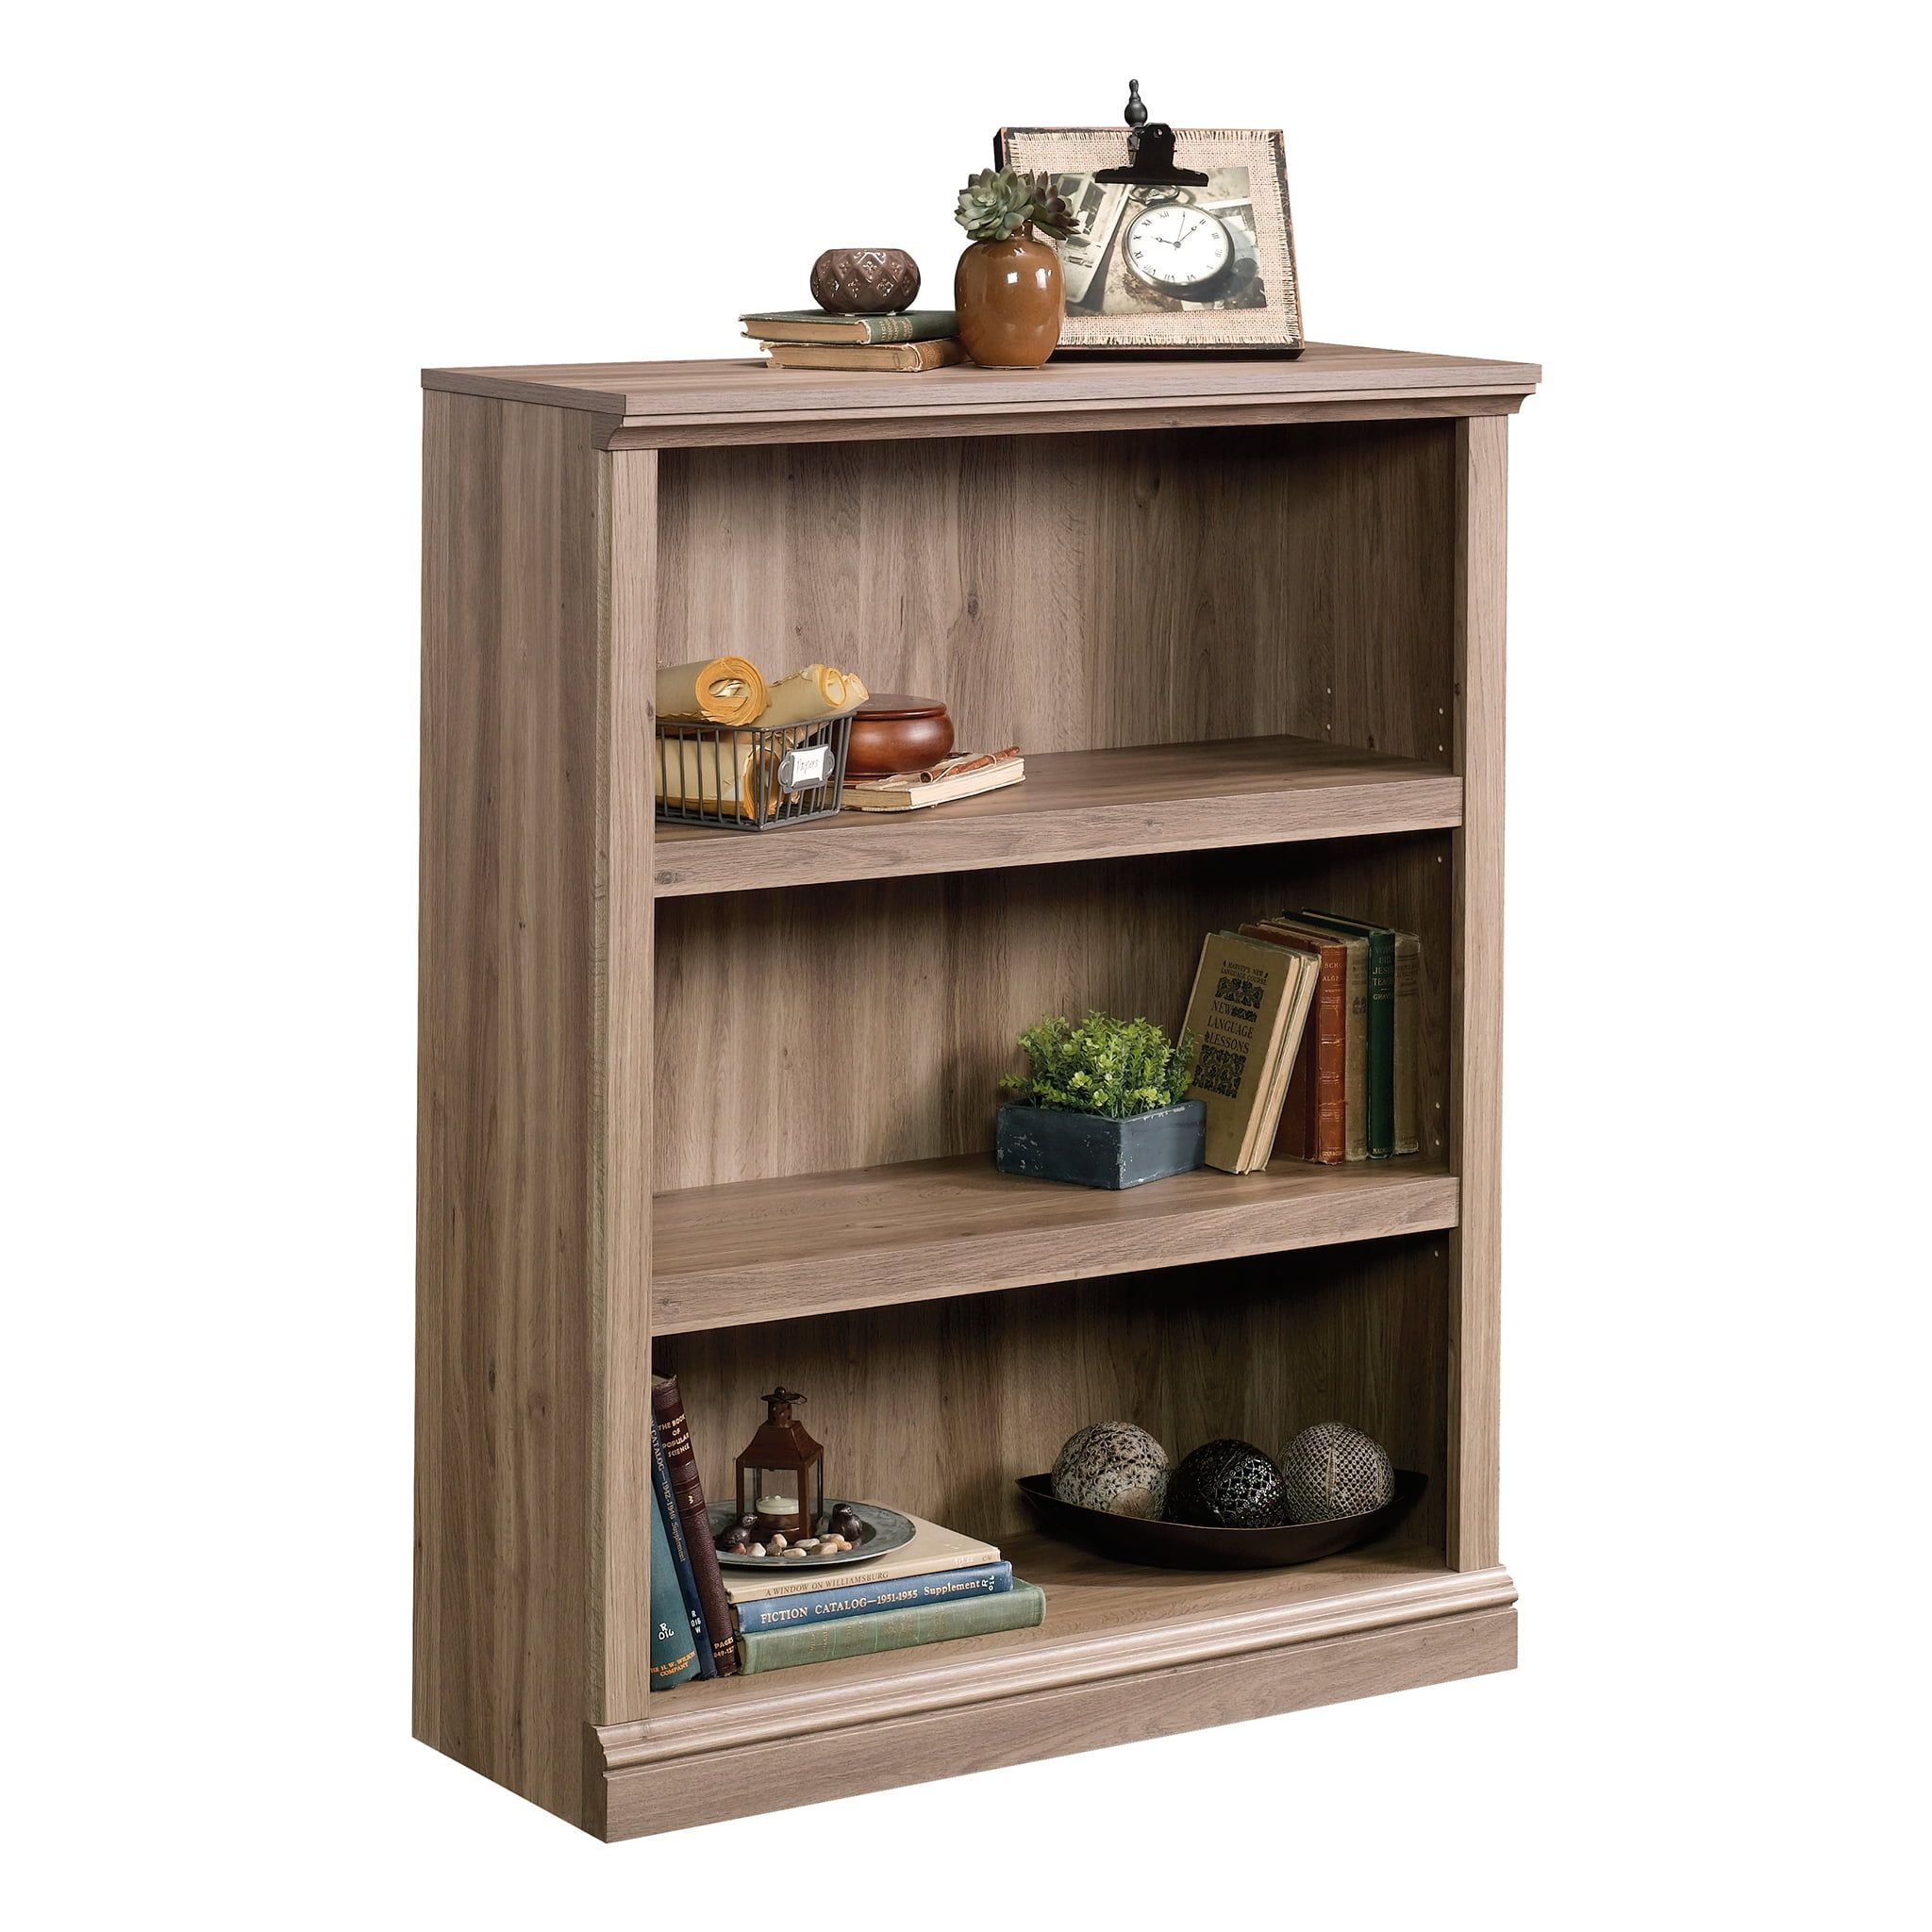 Salt Oak Adjustable 3-Shelf Wooden Bookcase